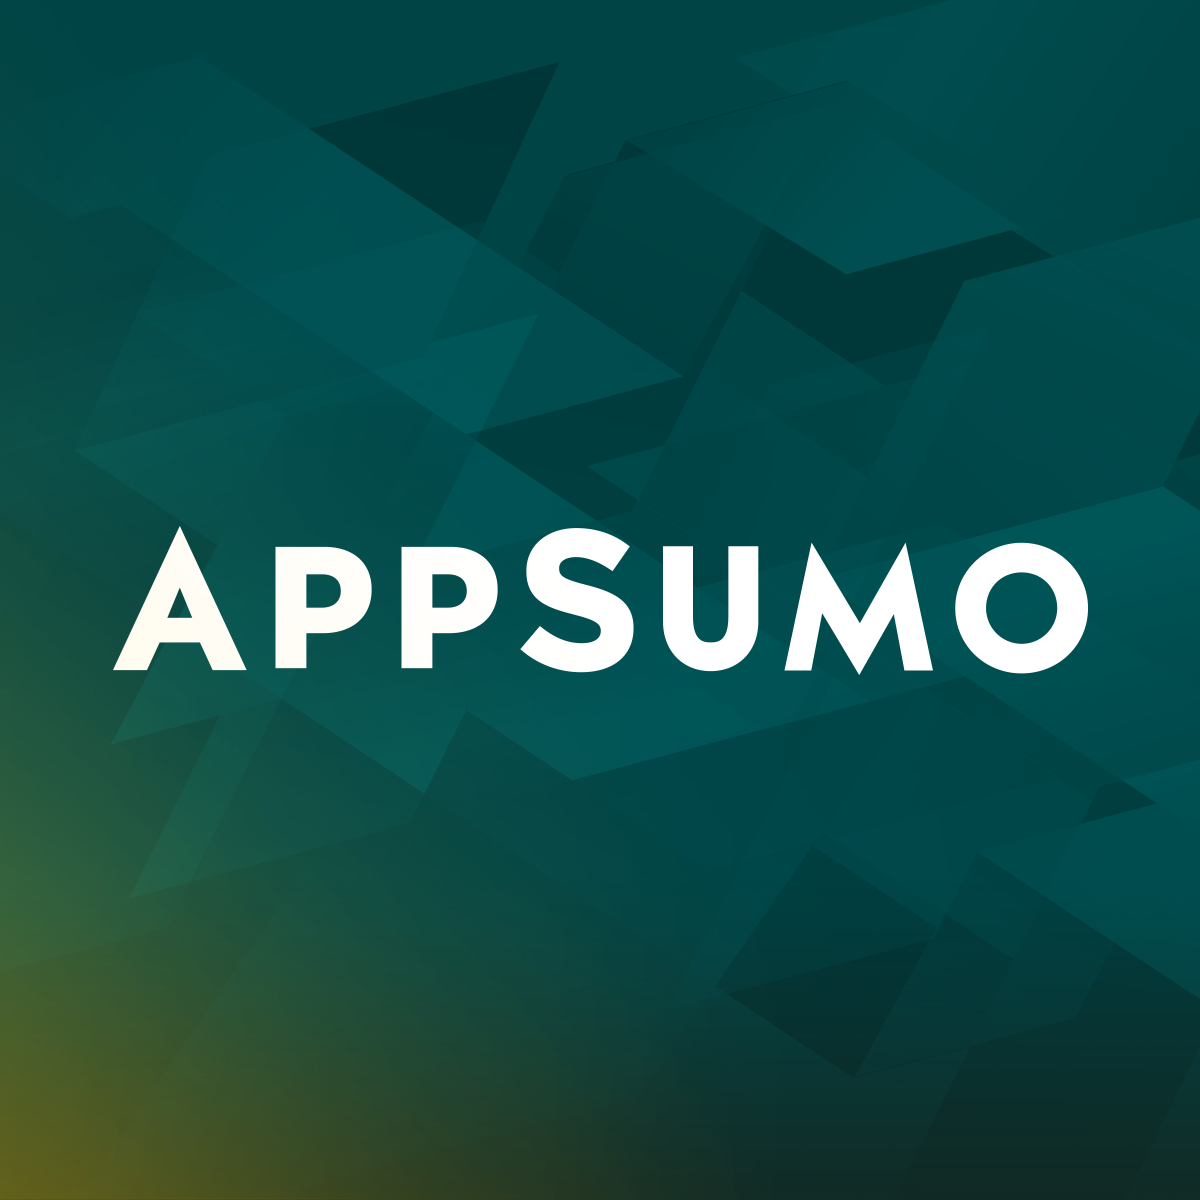 Appsumo.png